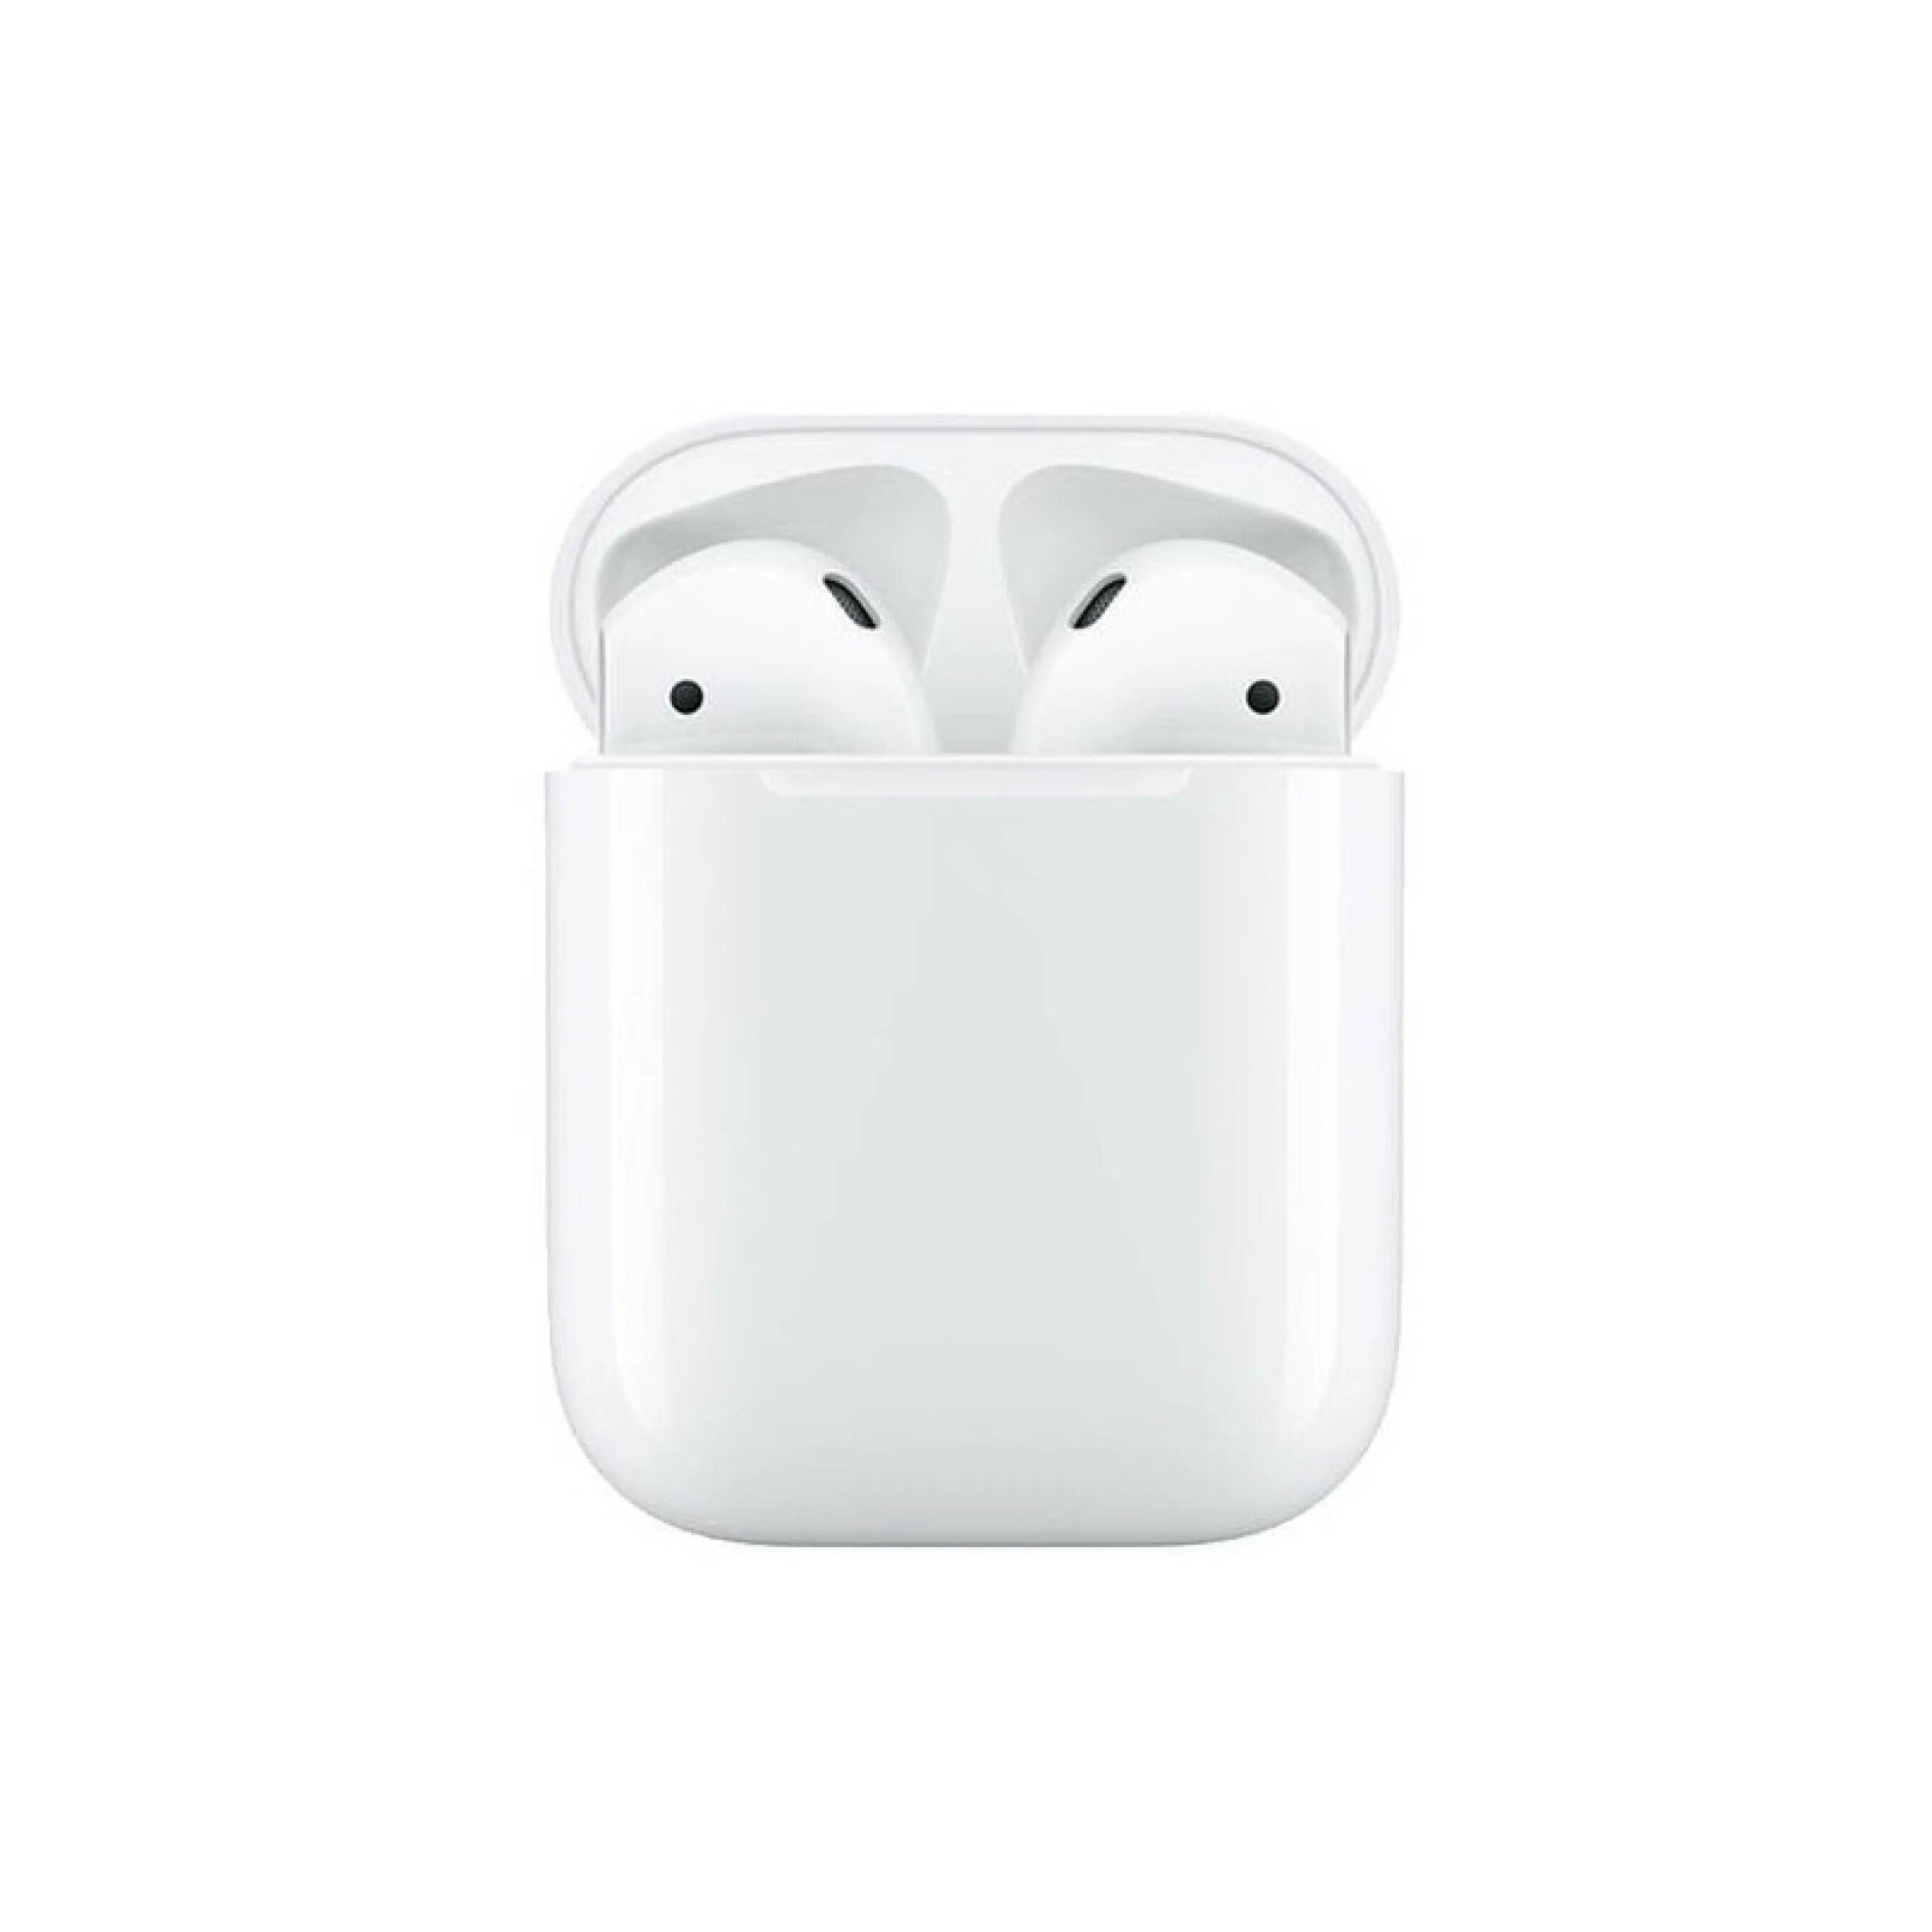 Airpods mv7n2 цены. Наушники Apple AIRPODS with Charging Case (mv7n2). Apple AIRPODS 2 with Charging Case White (mv7n2am/a). Apple AIRPODS 2 mv7n2.